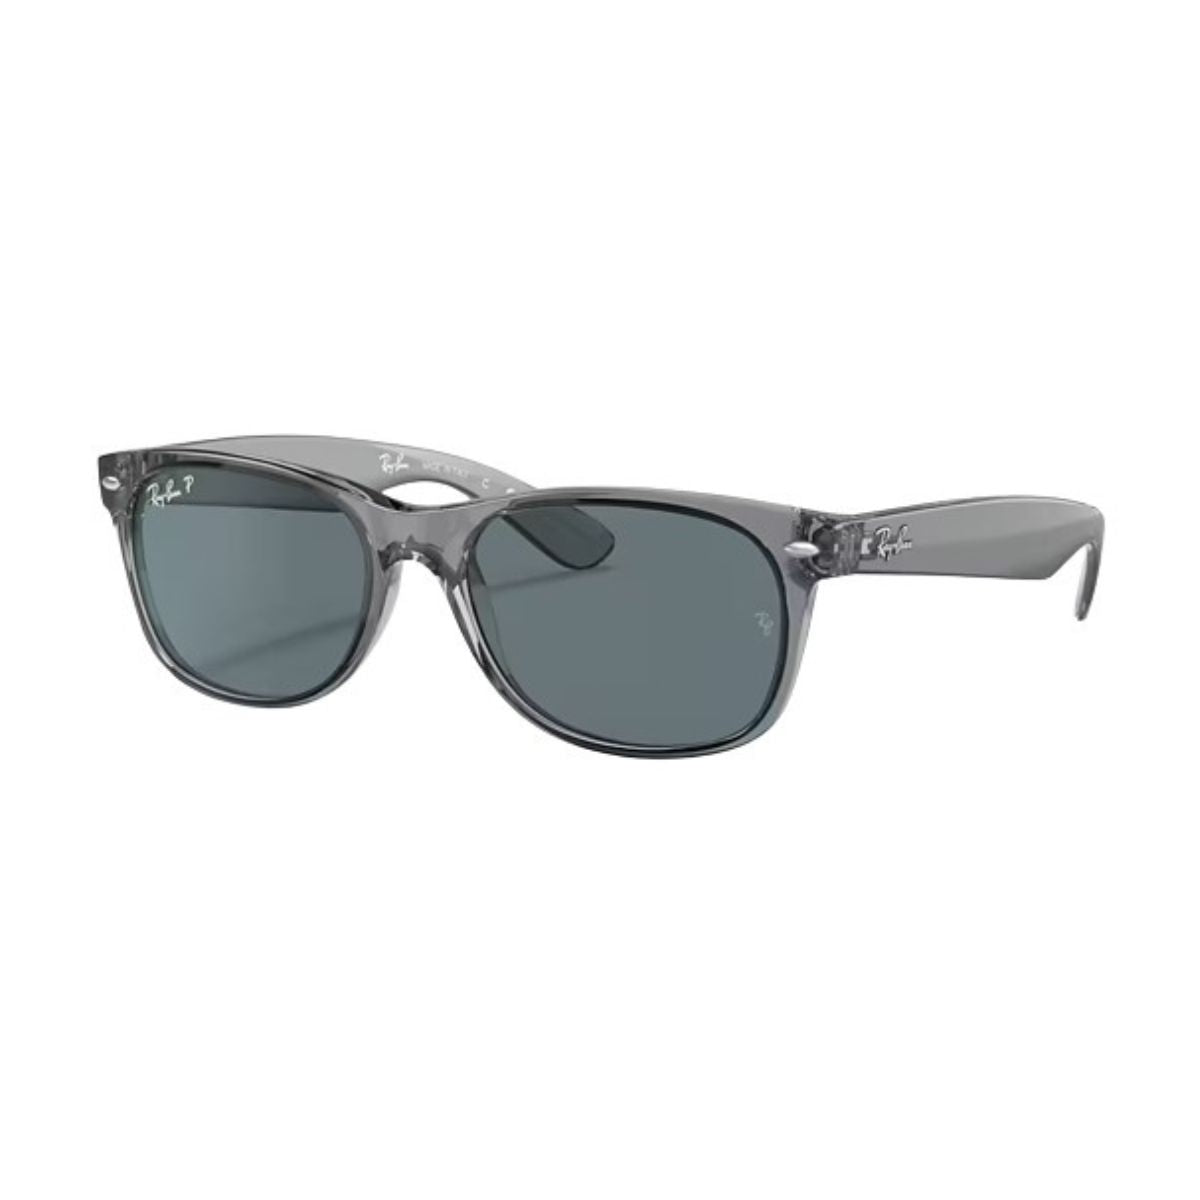 "Buy Ray Ban 2132 6450/3R Wayfarer Frame UV Sunglasses For Men And Women At Optorium"